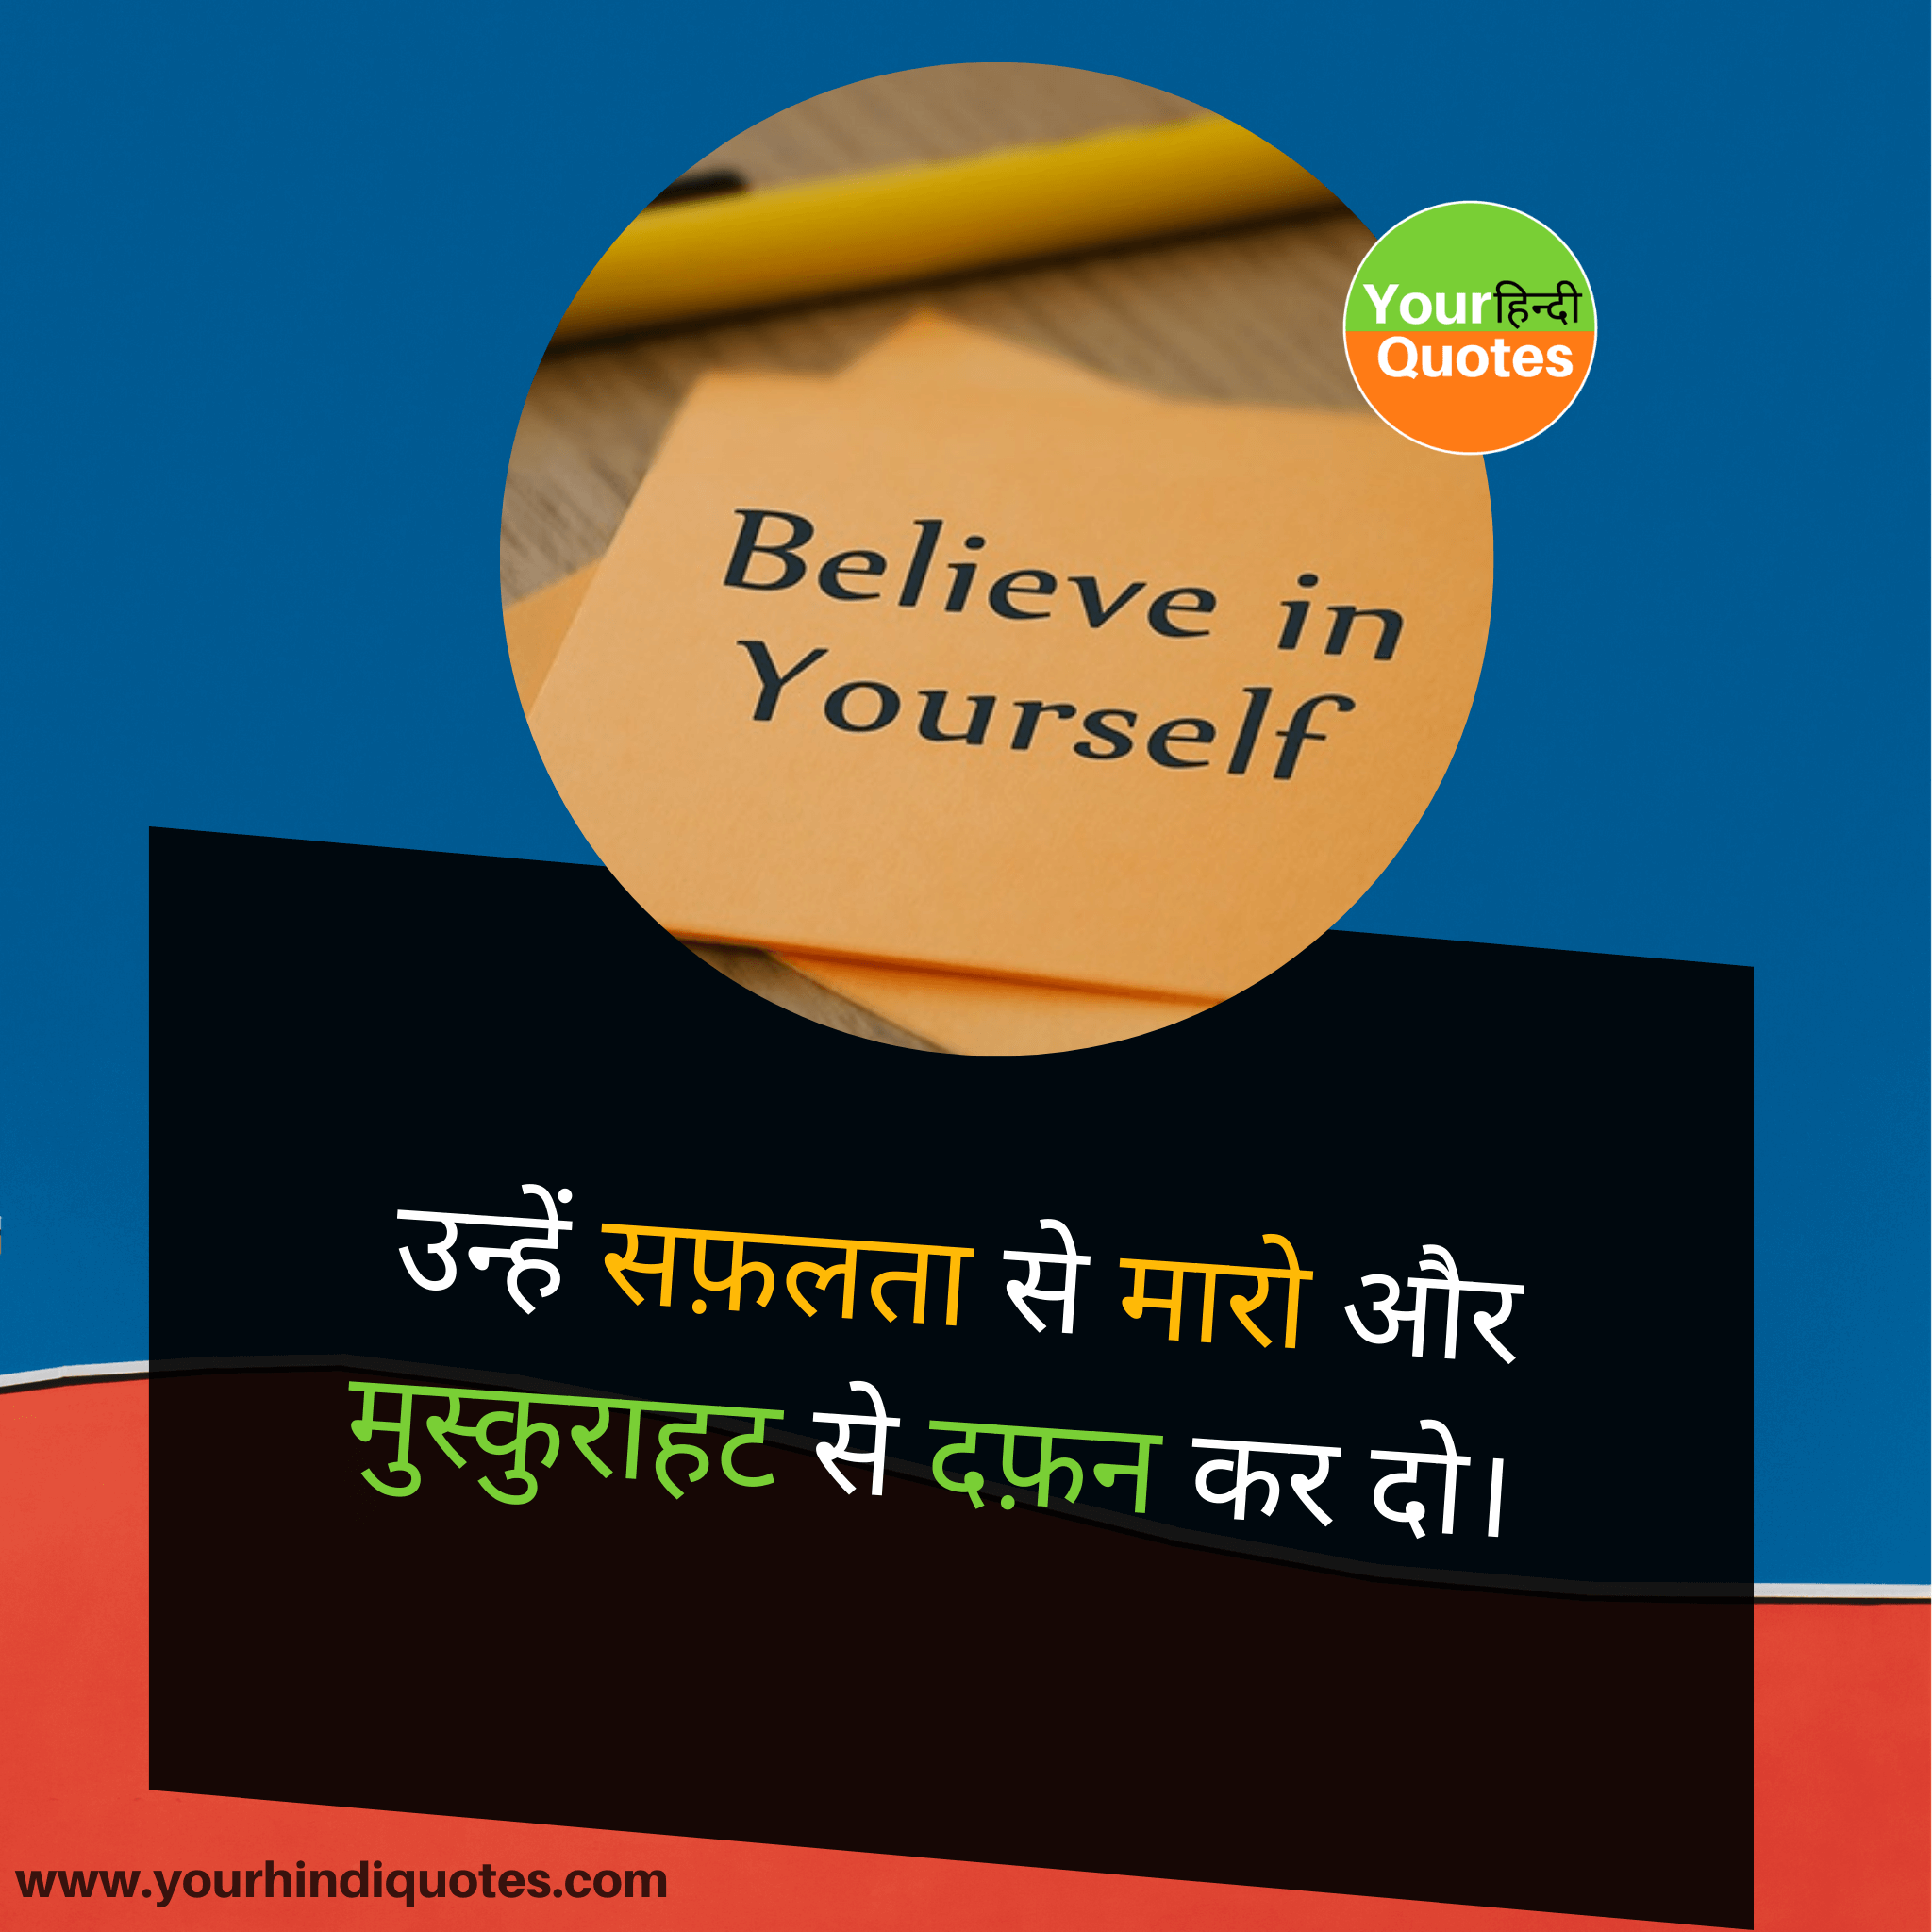 Success quotes hindi images